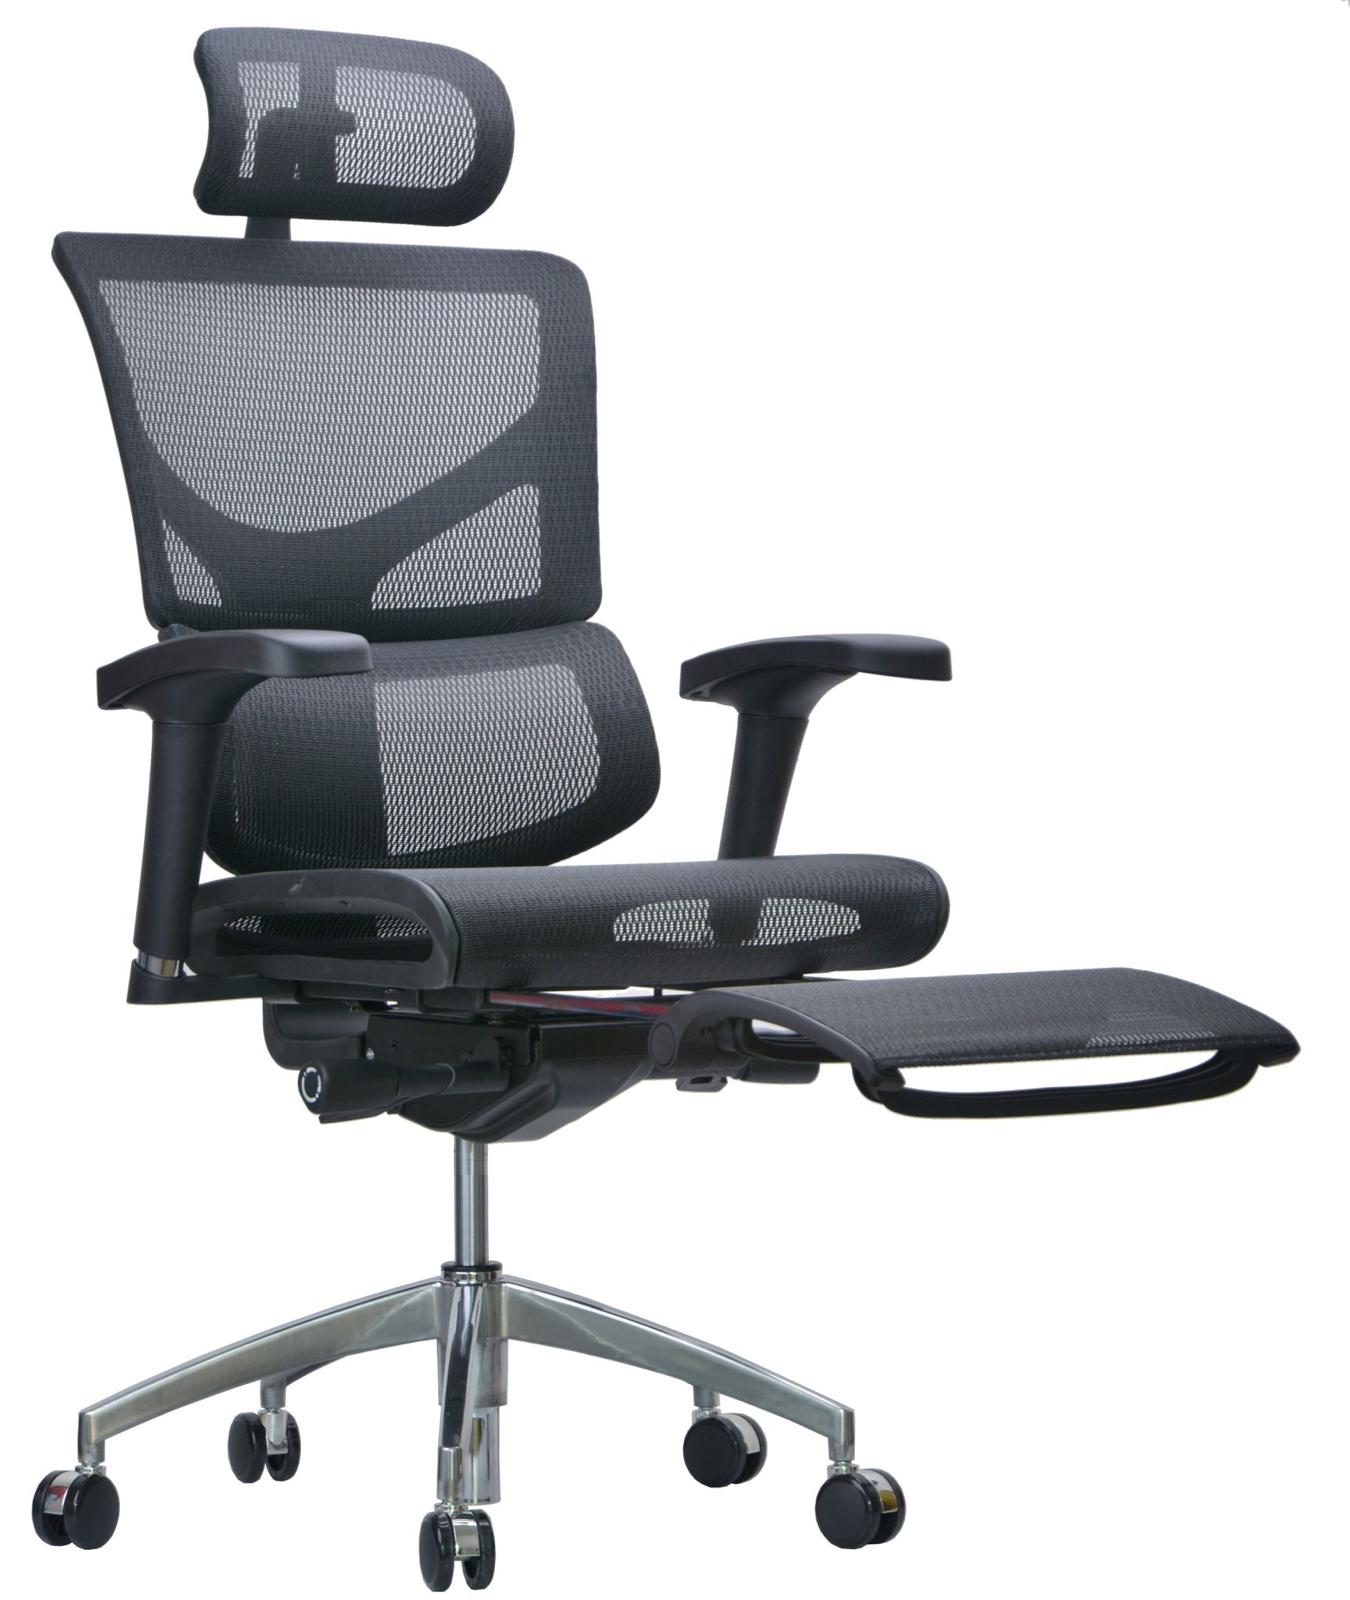 Premium Mesh Chair - Space by iergo - Free Installation